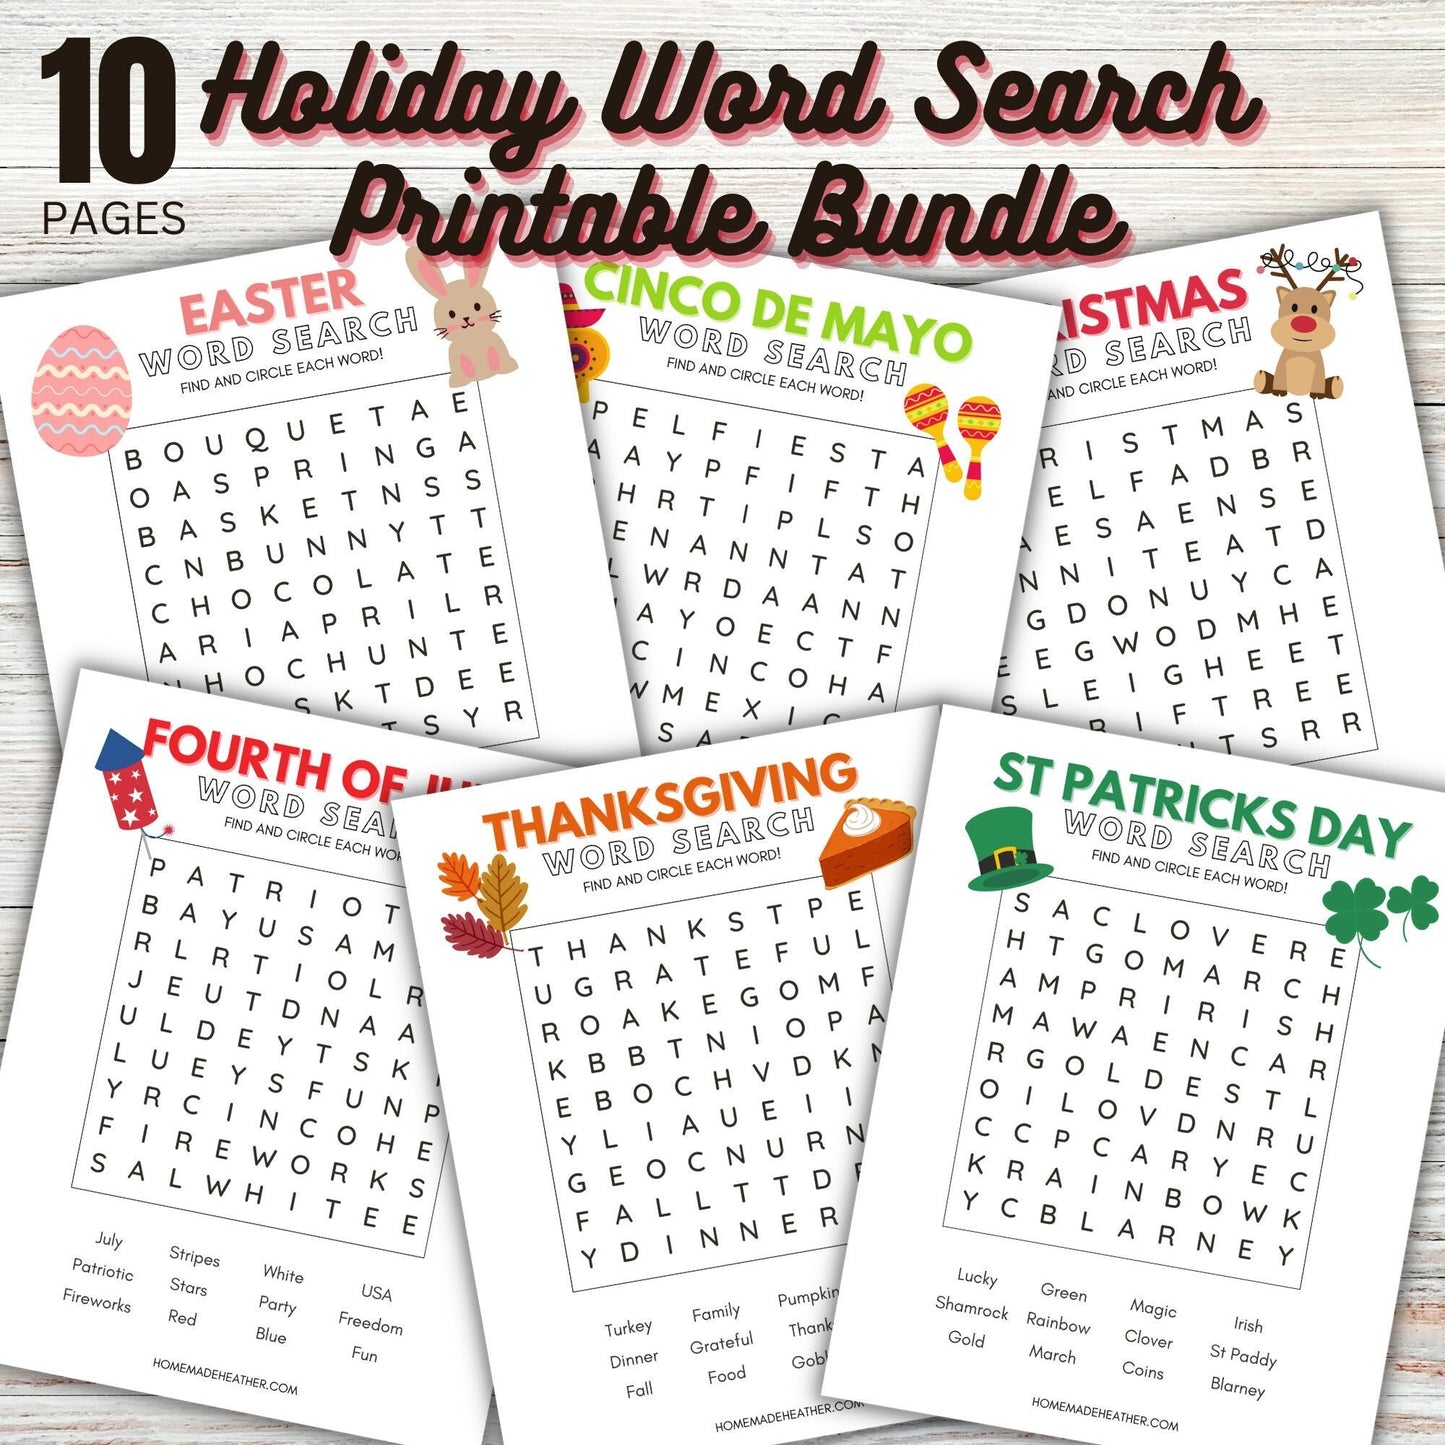 10 Holiday Word Search Printable Bundle - Word Search Holiday Bundle Printable PDF - Instant Download